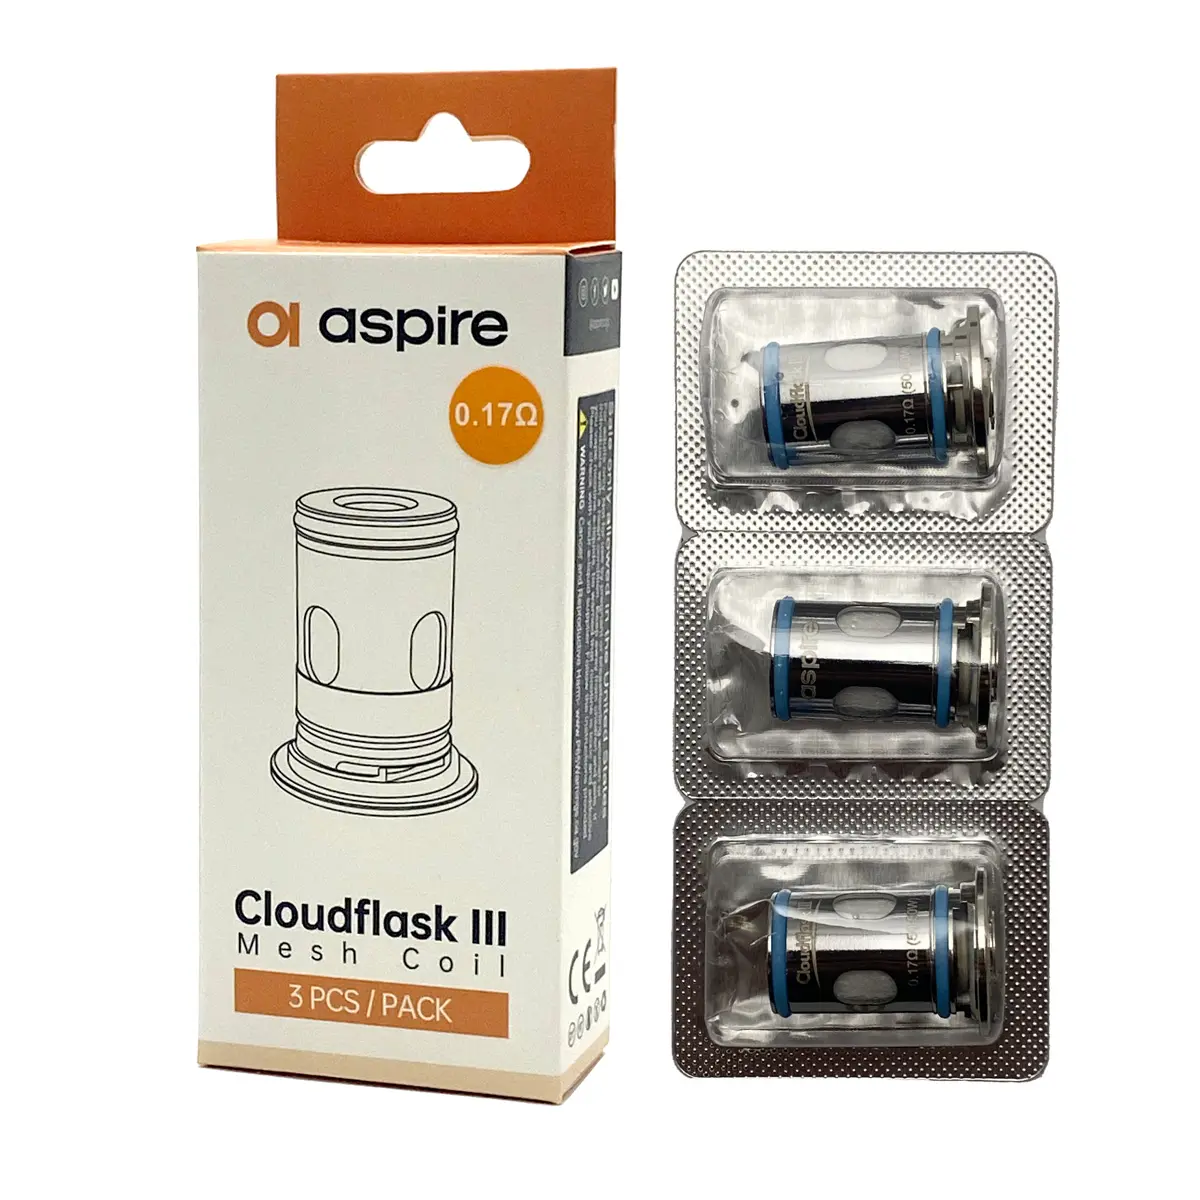 Motel Geurig vrijgesteld Aspire Cloudflask III 0.17Ω Mesh Coils (3 pack) - Black Note